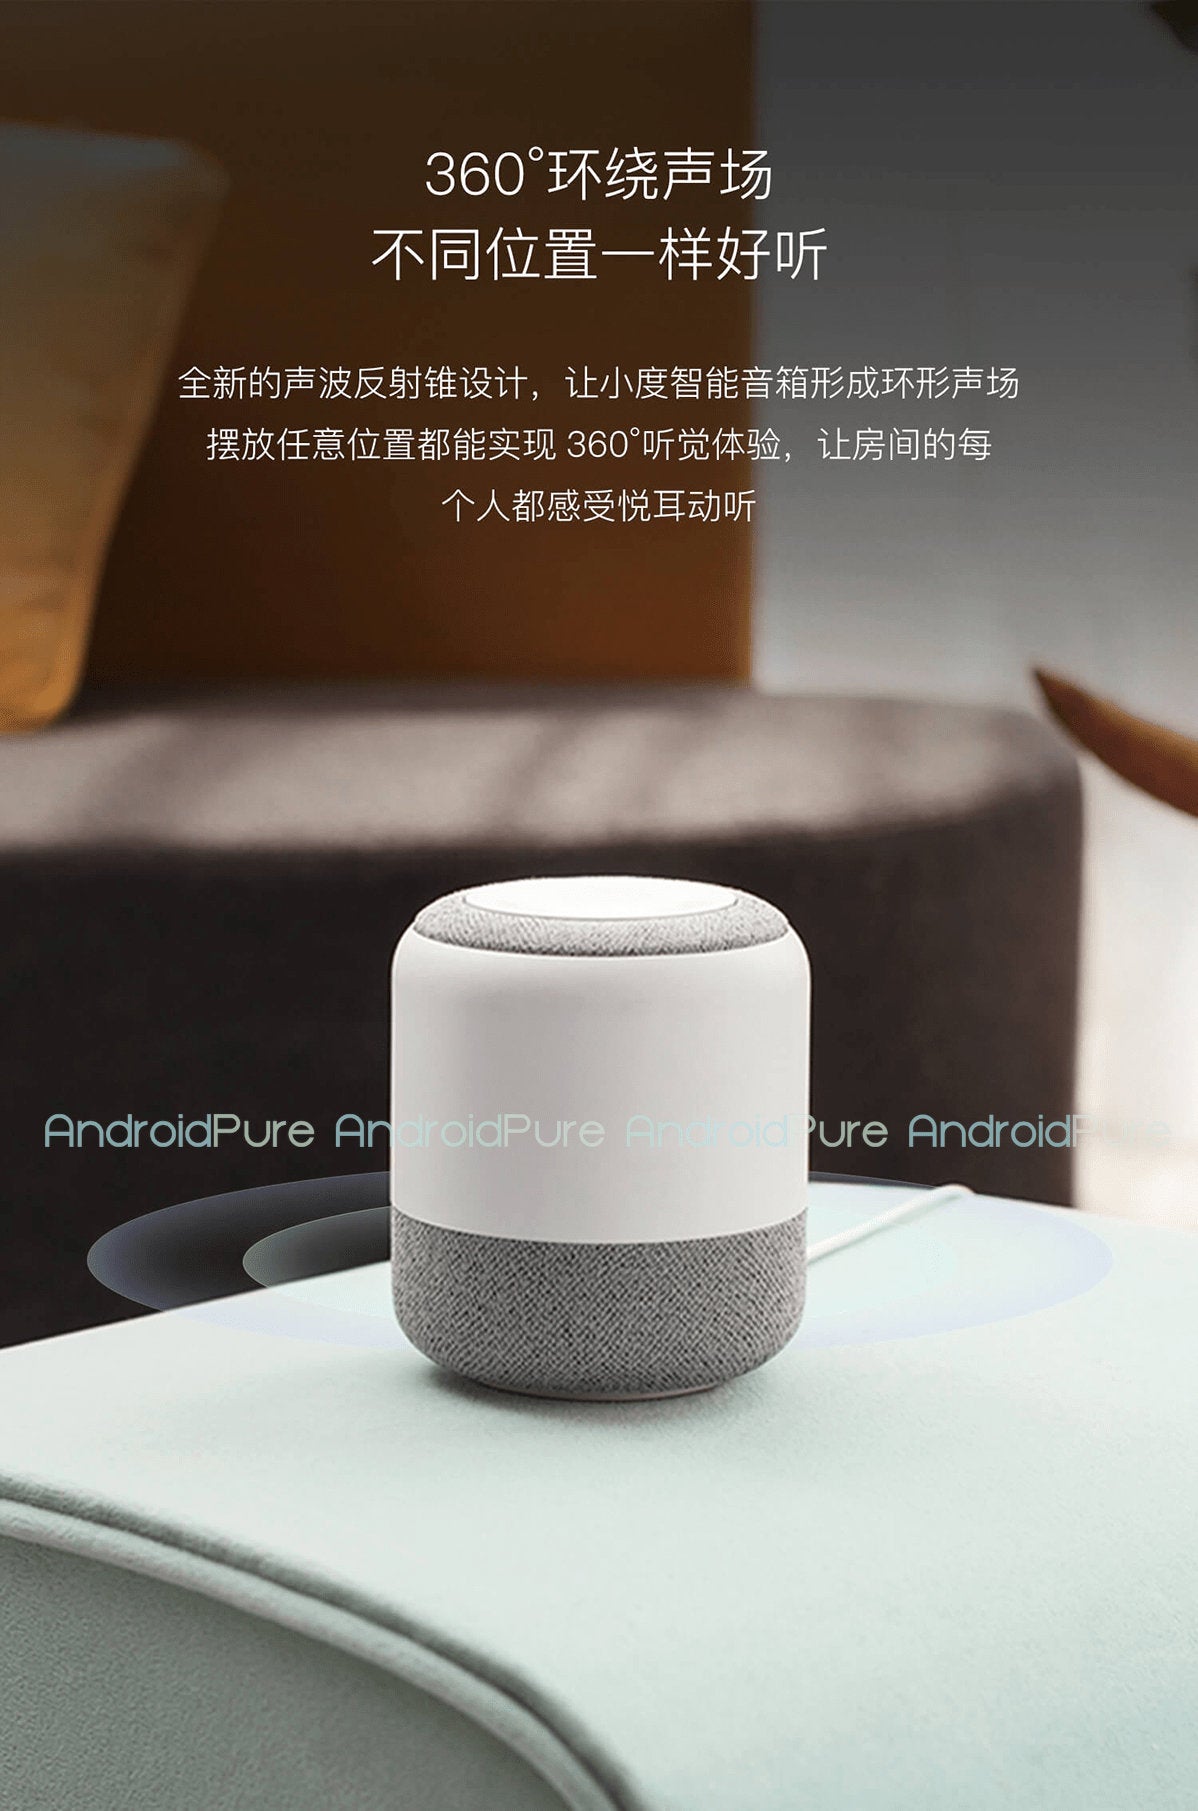 Motorola set to launch Amazon Echo and Google Home smart speaker competitor